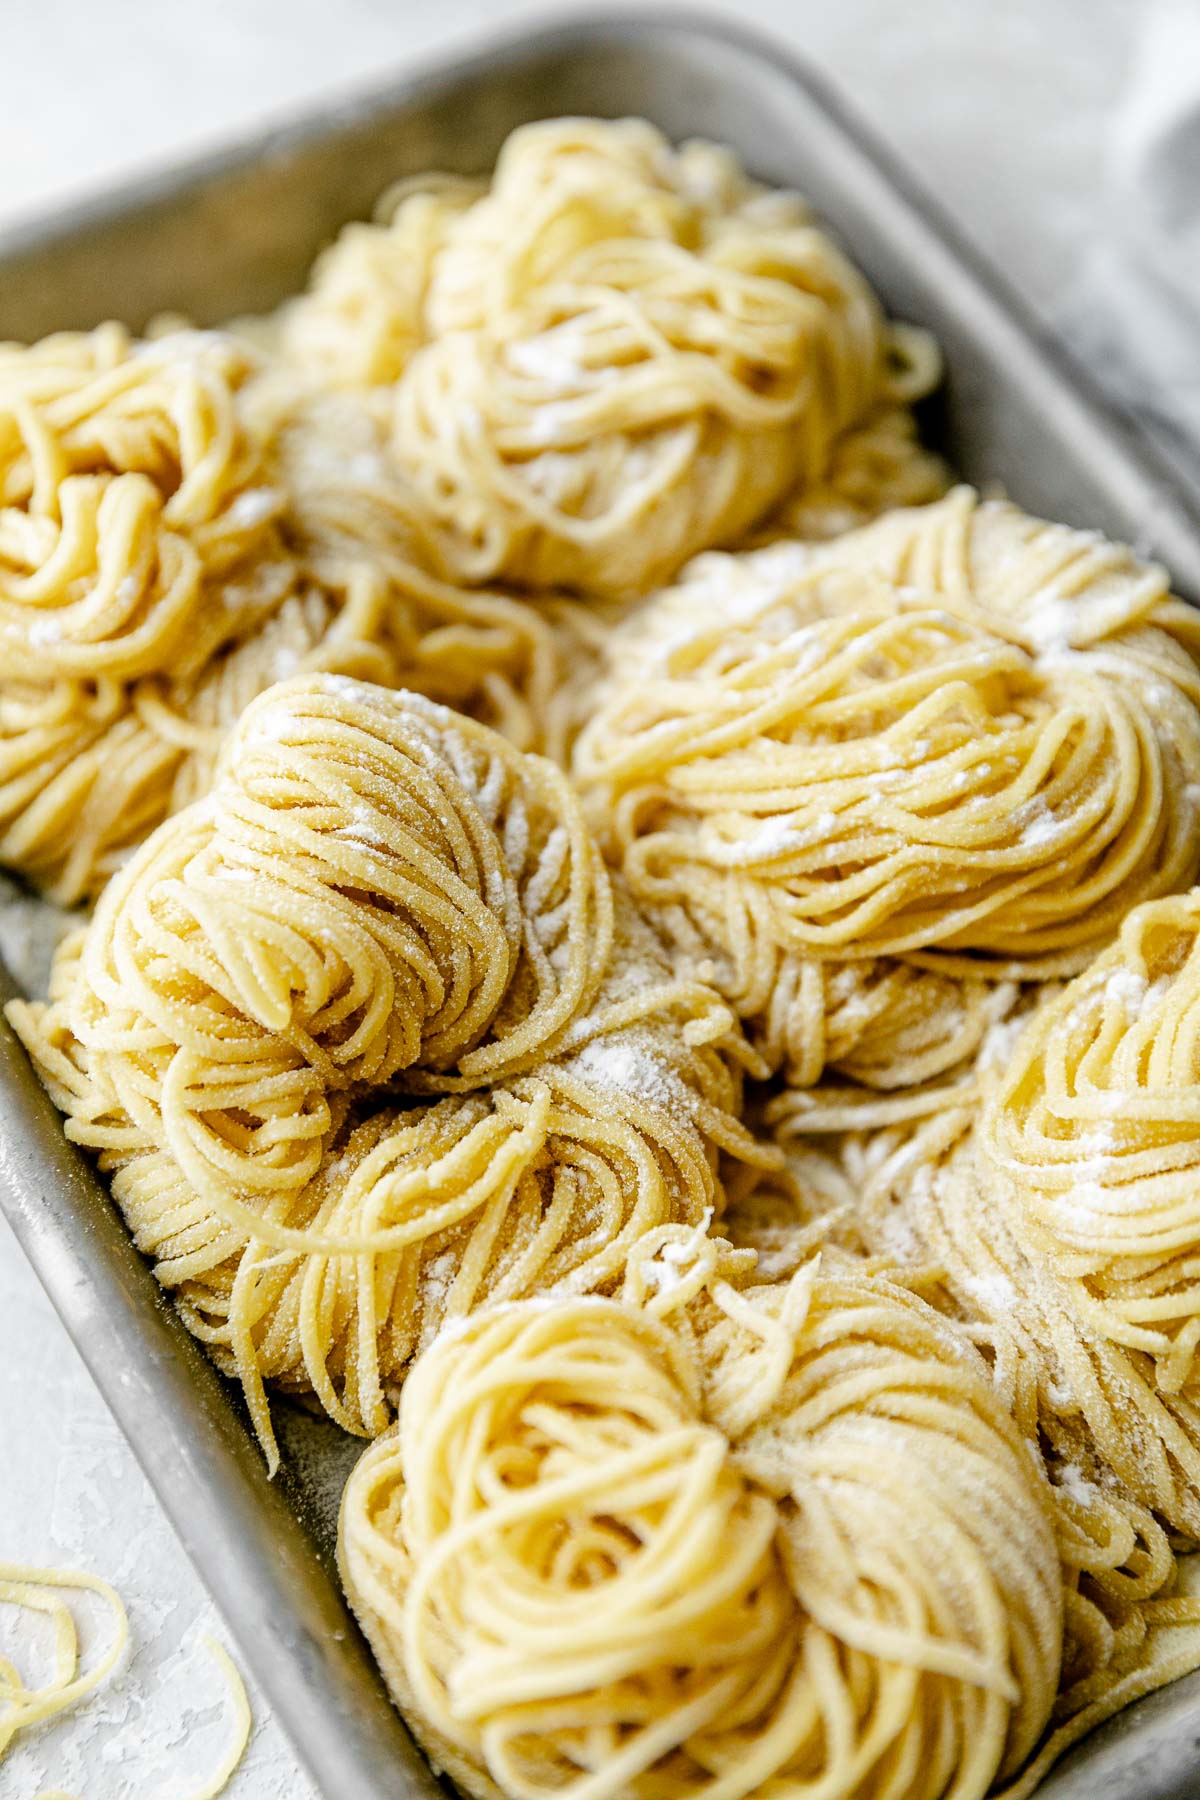 3 Piece For KitchenAid Pasta Roller Spaghetti Cutter Pressed Noodle  Attachment